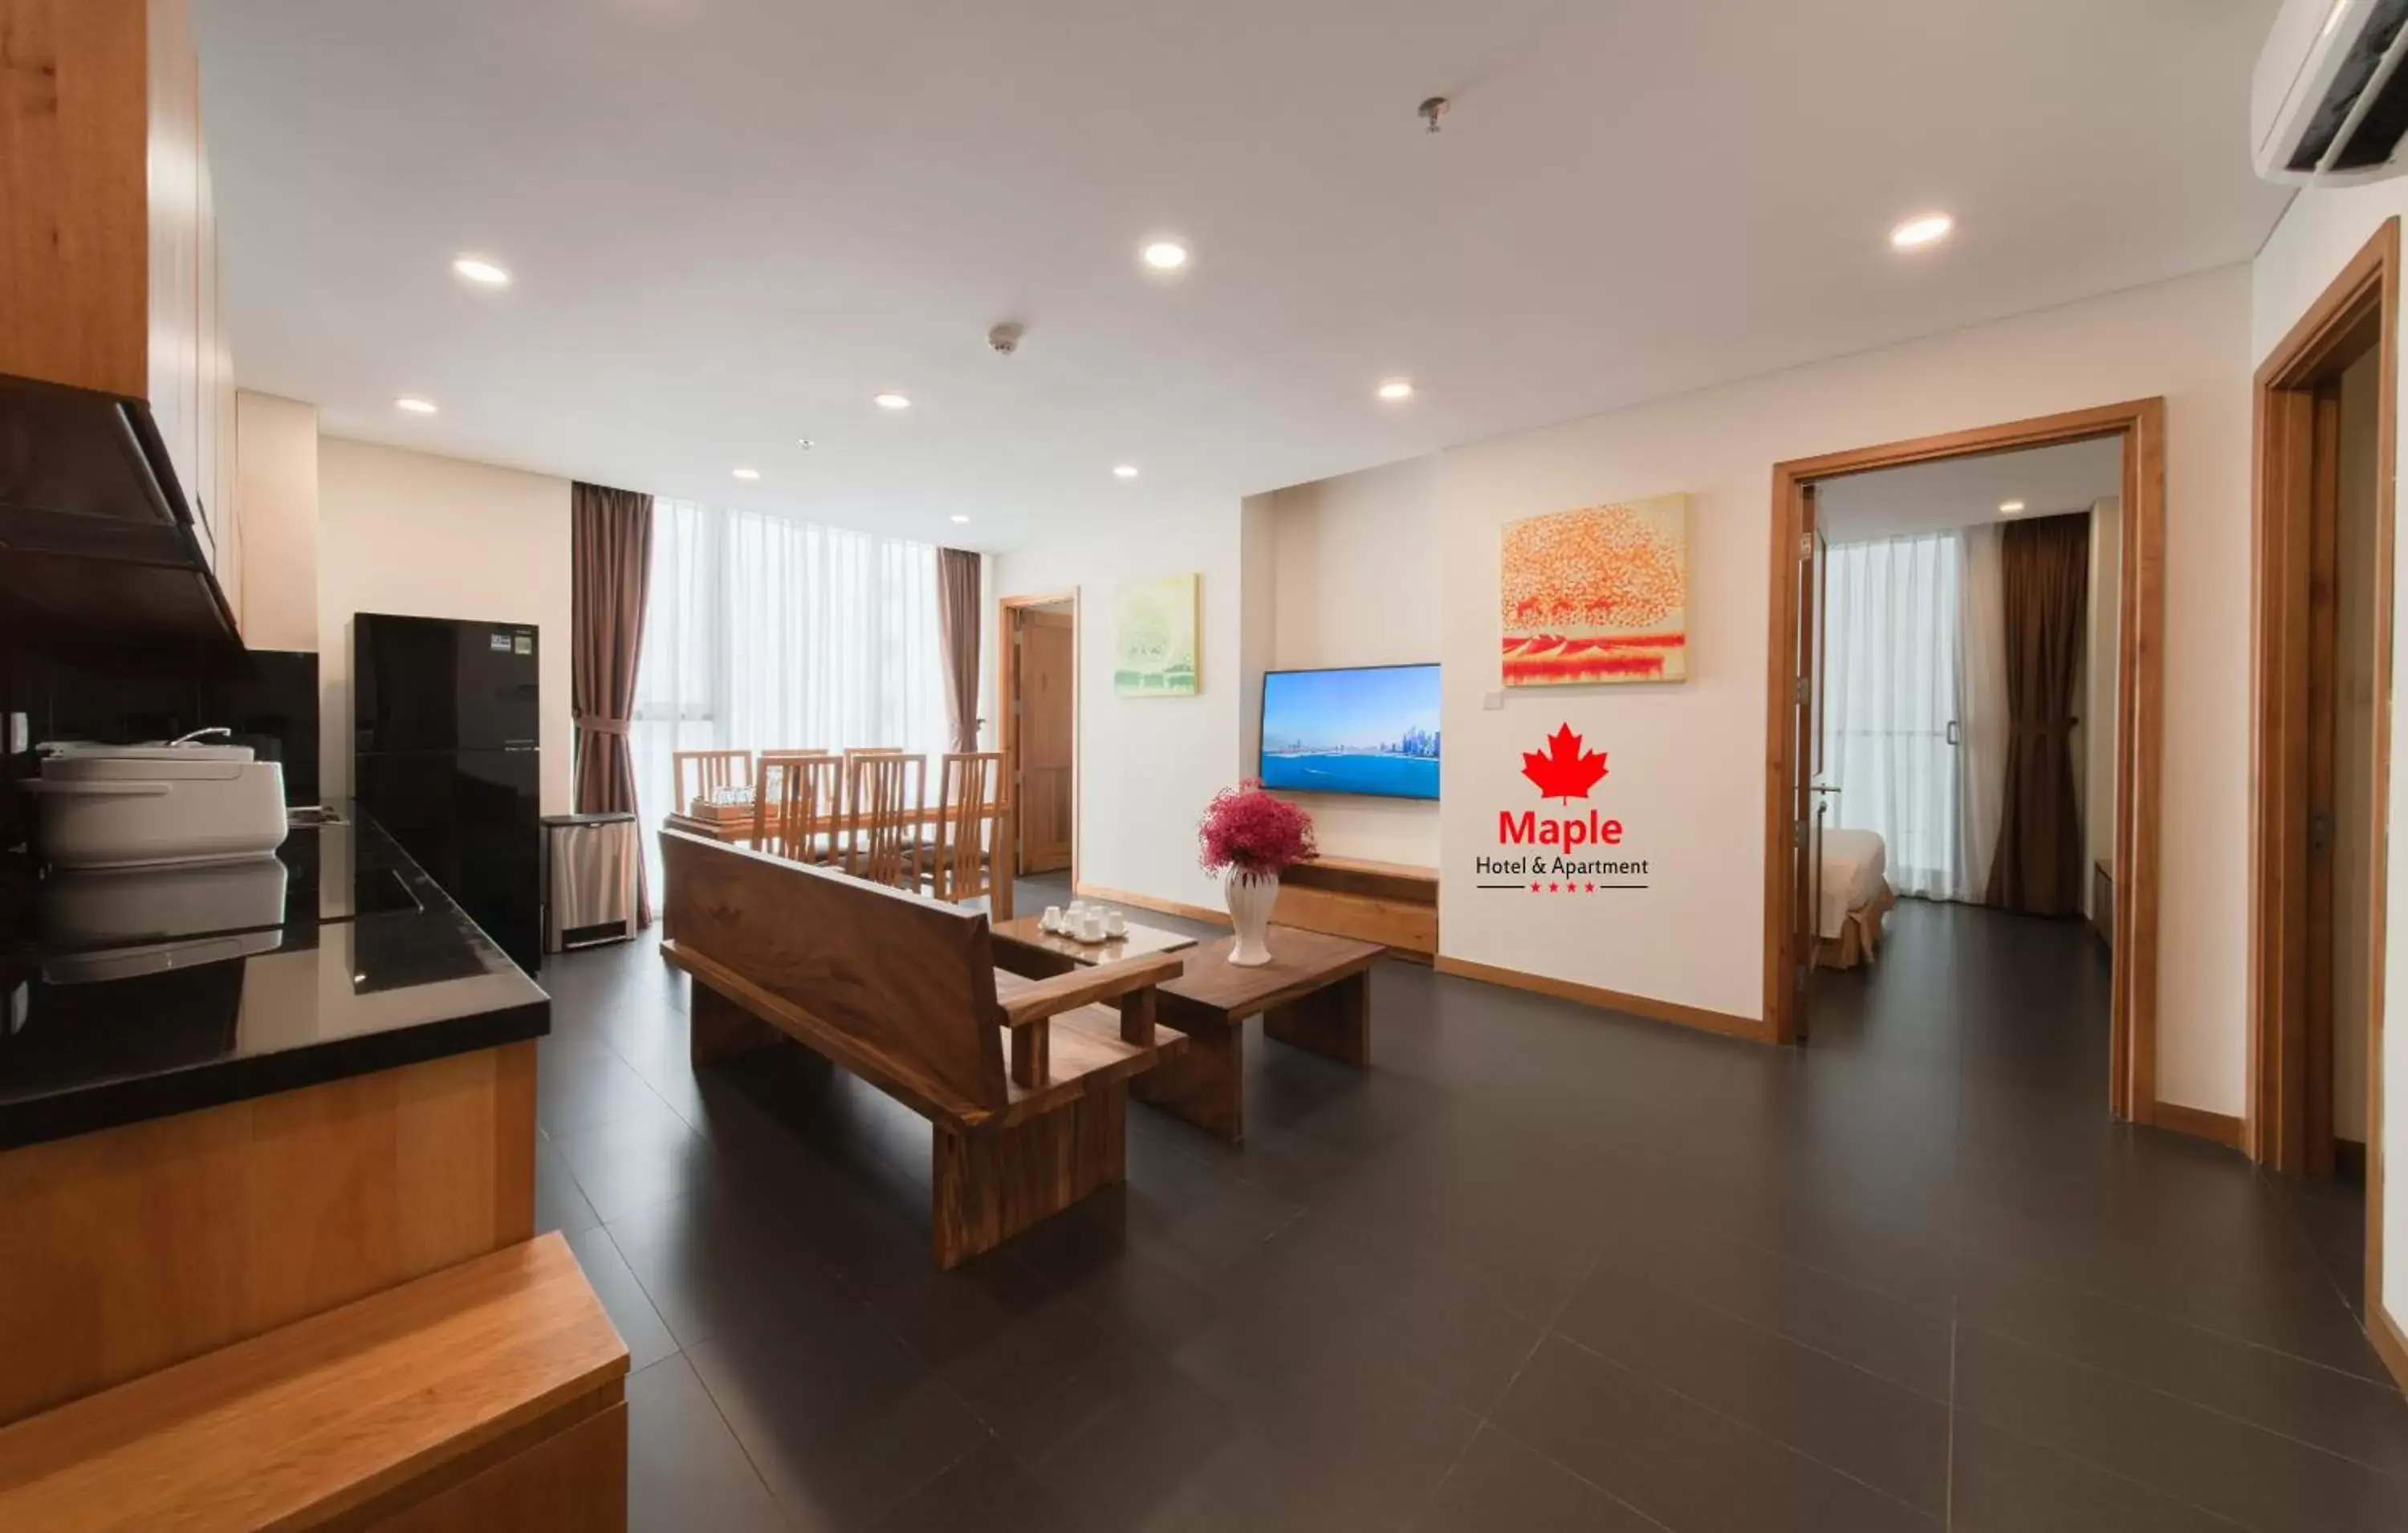 TV and multimedia, TV/Entertainment Center in Maple Hotel & Apartment